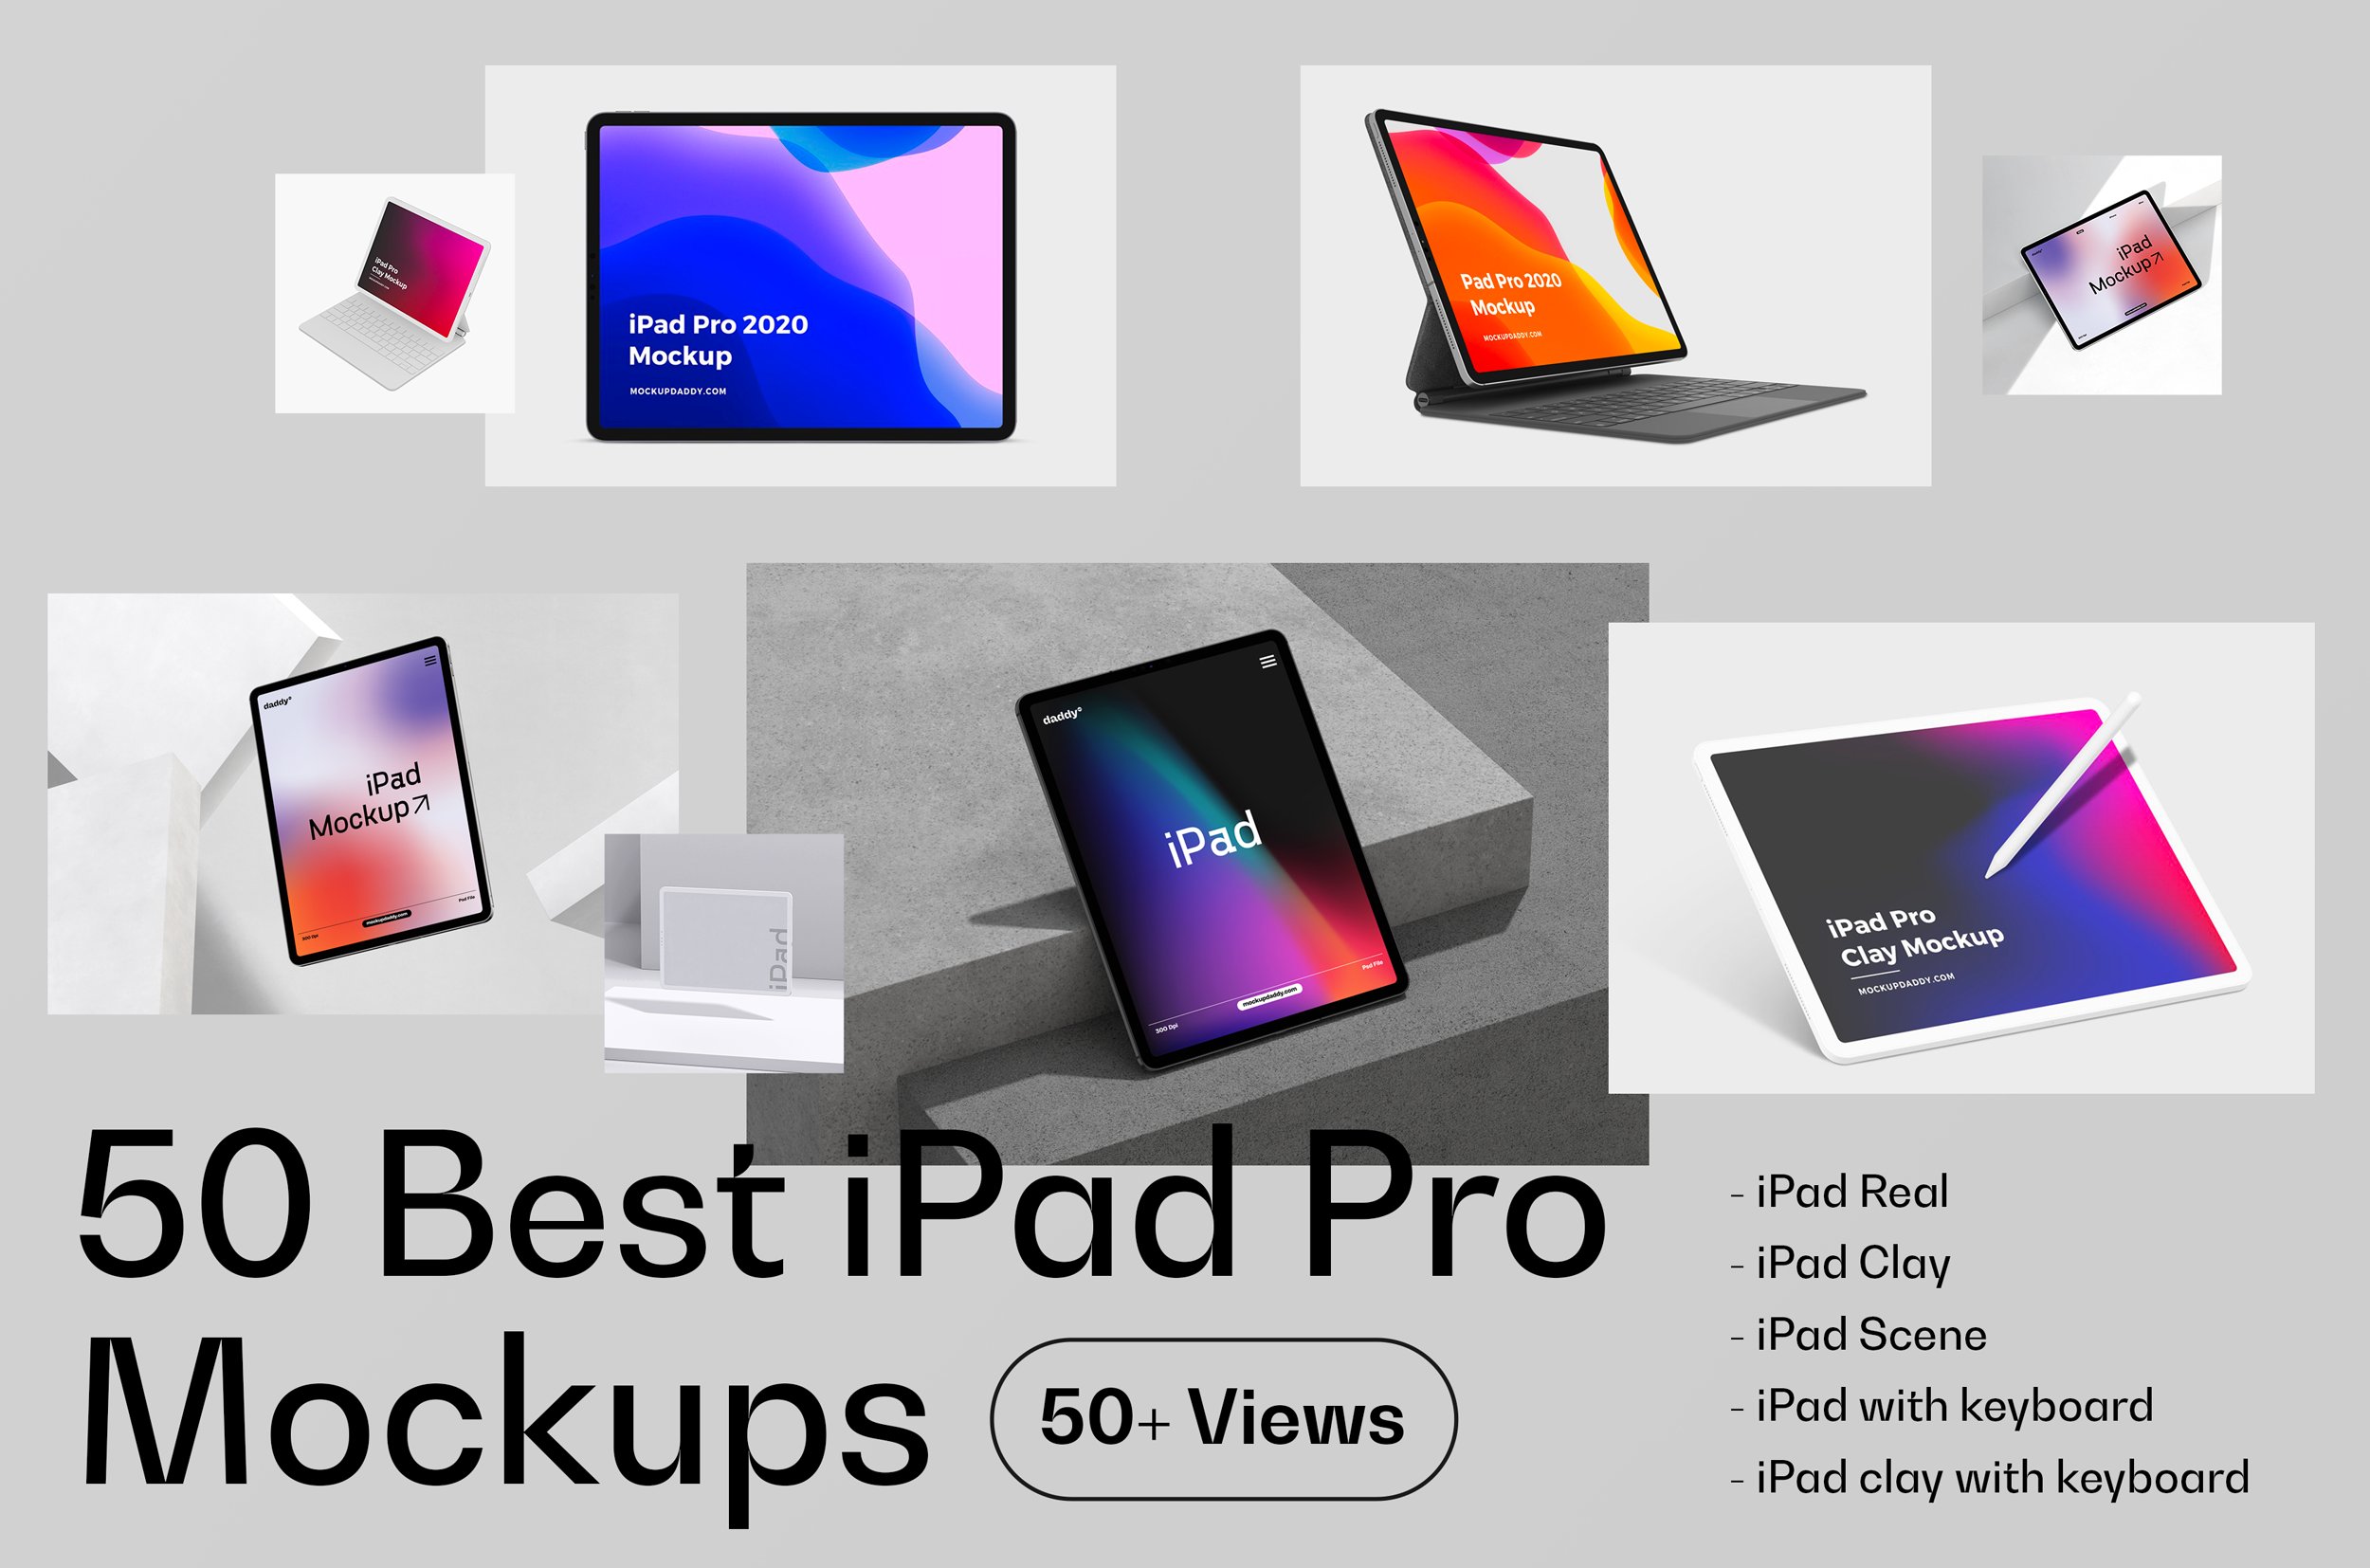 iPad Pro Mockups & Scenes - 